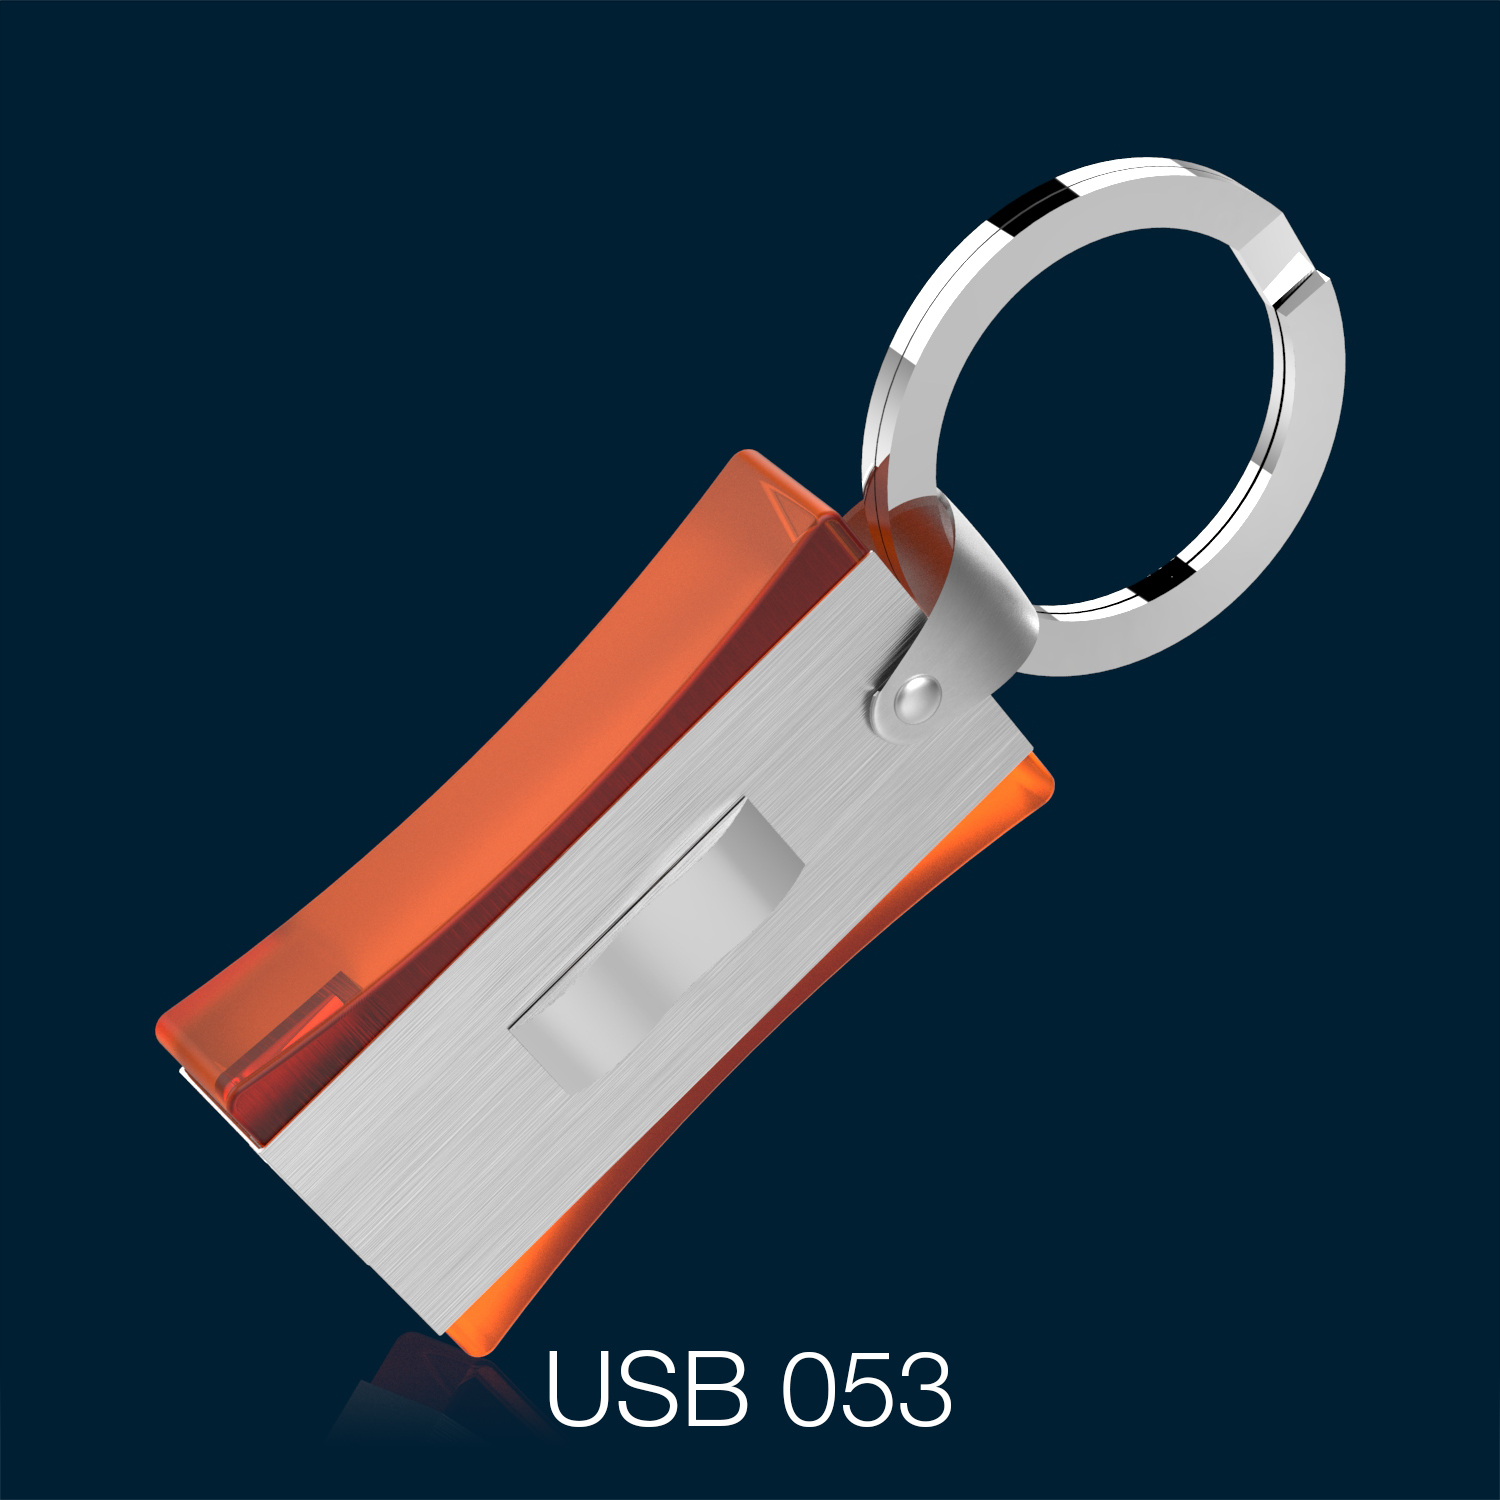 USB 053